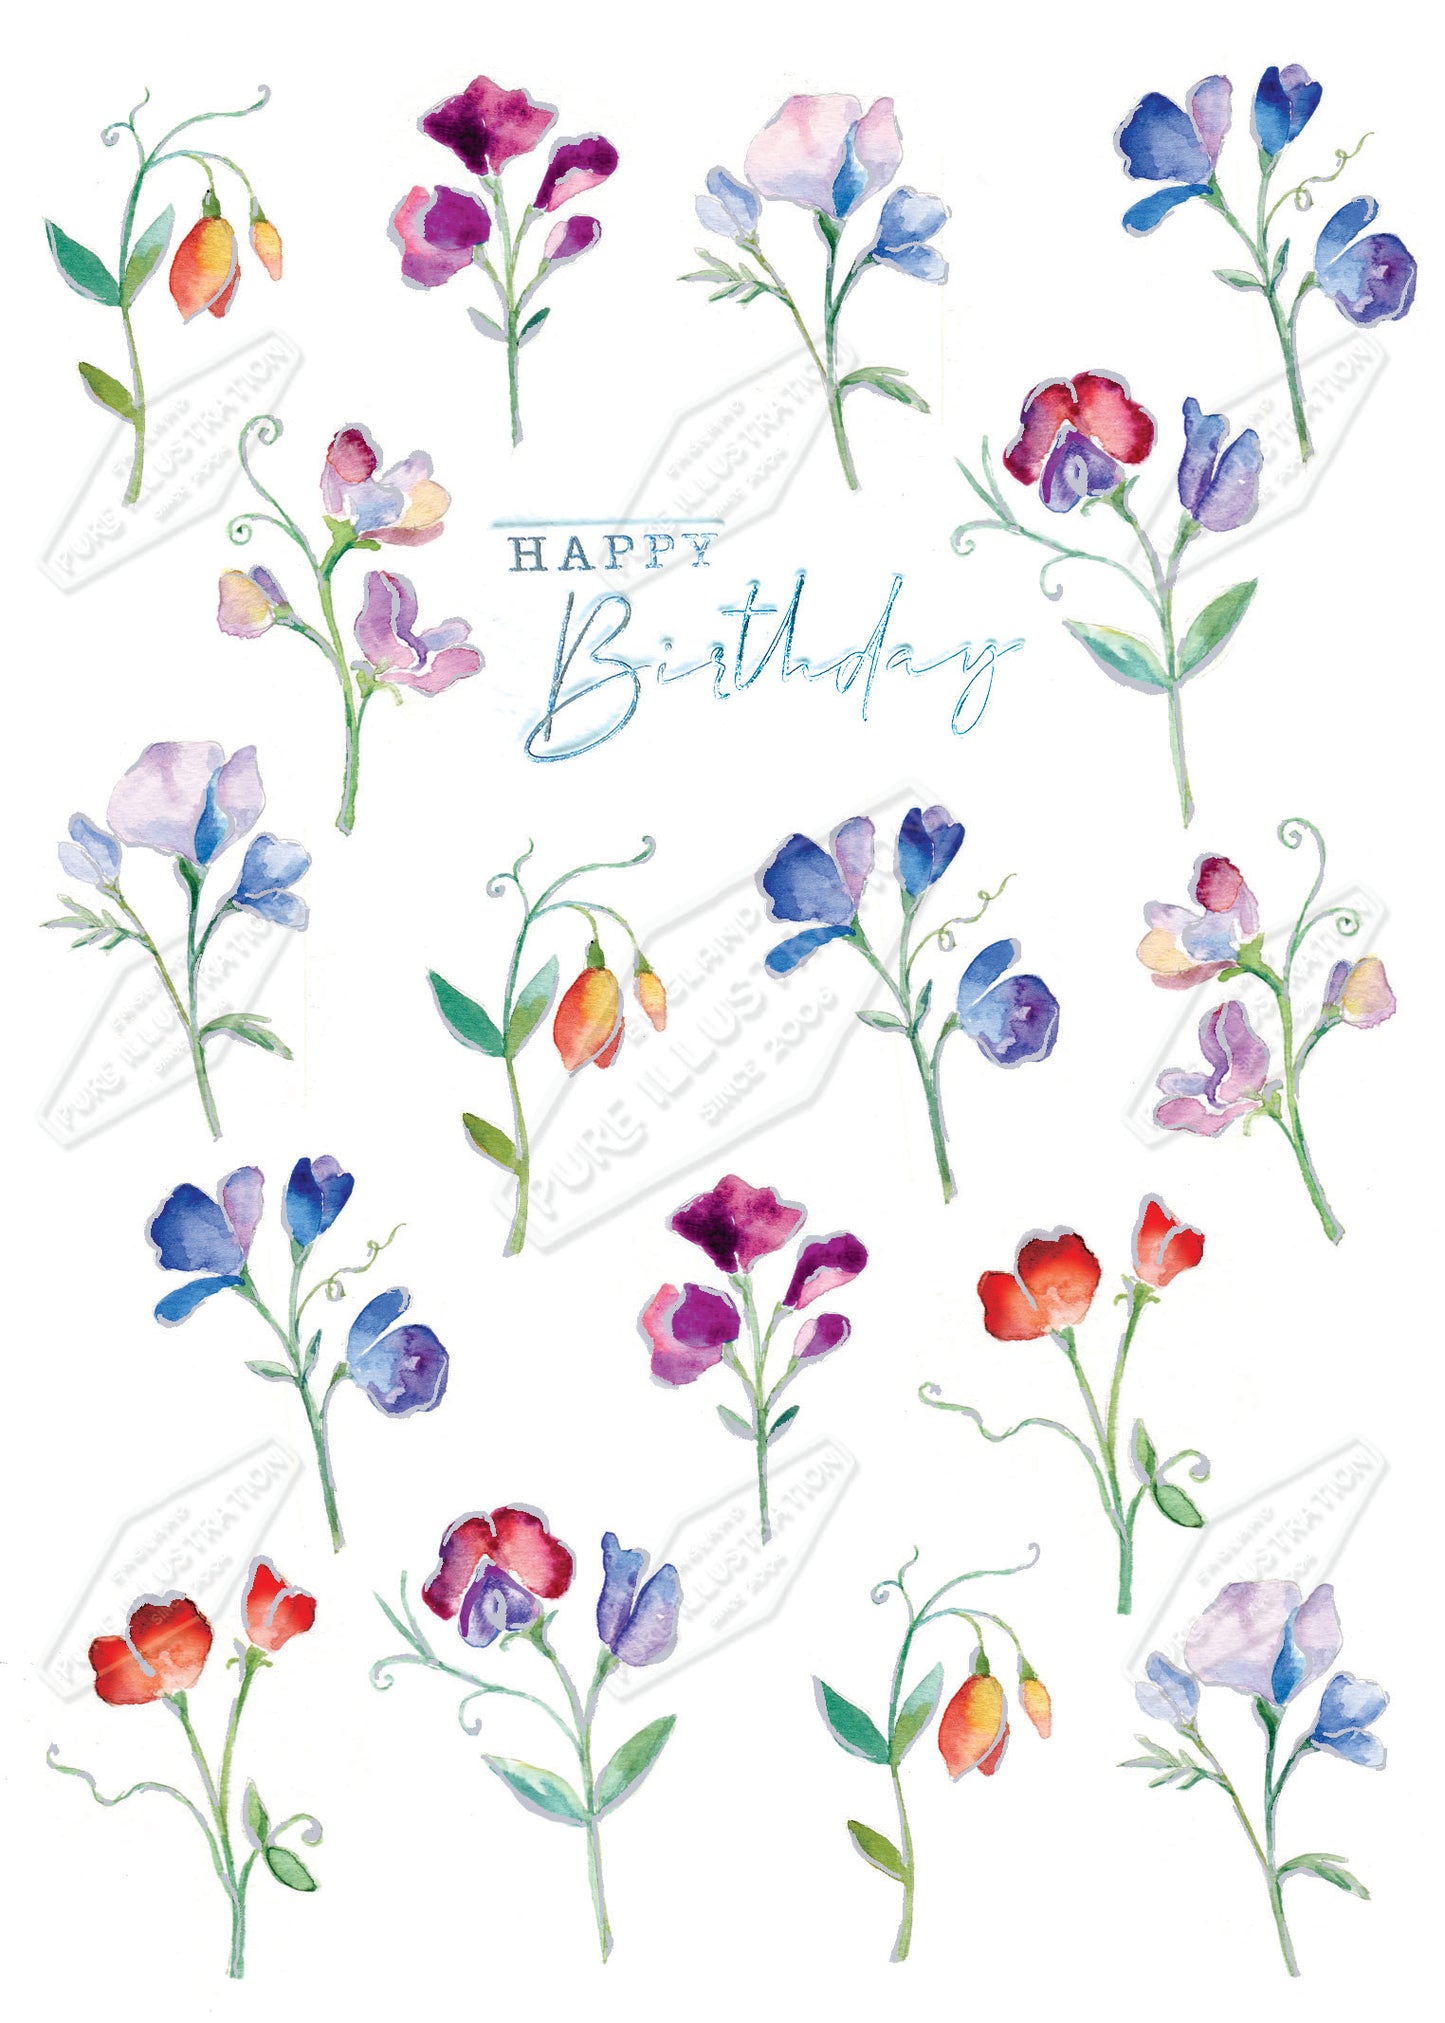 00035837DEVa - Deva Evans is represented by Pure Art Licensing Agency - Birthday Greeting Card Design